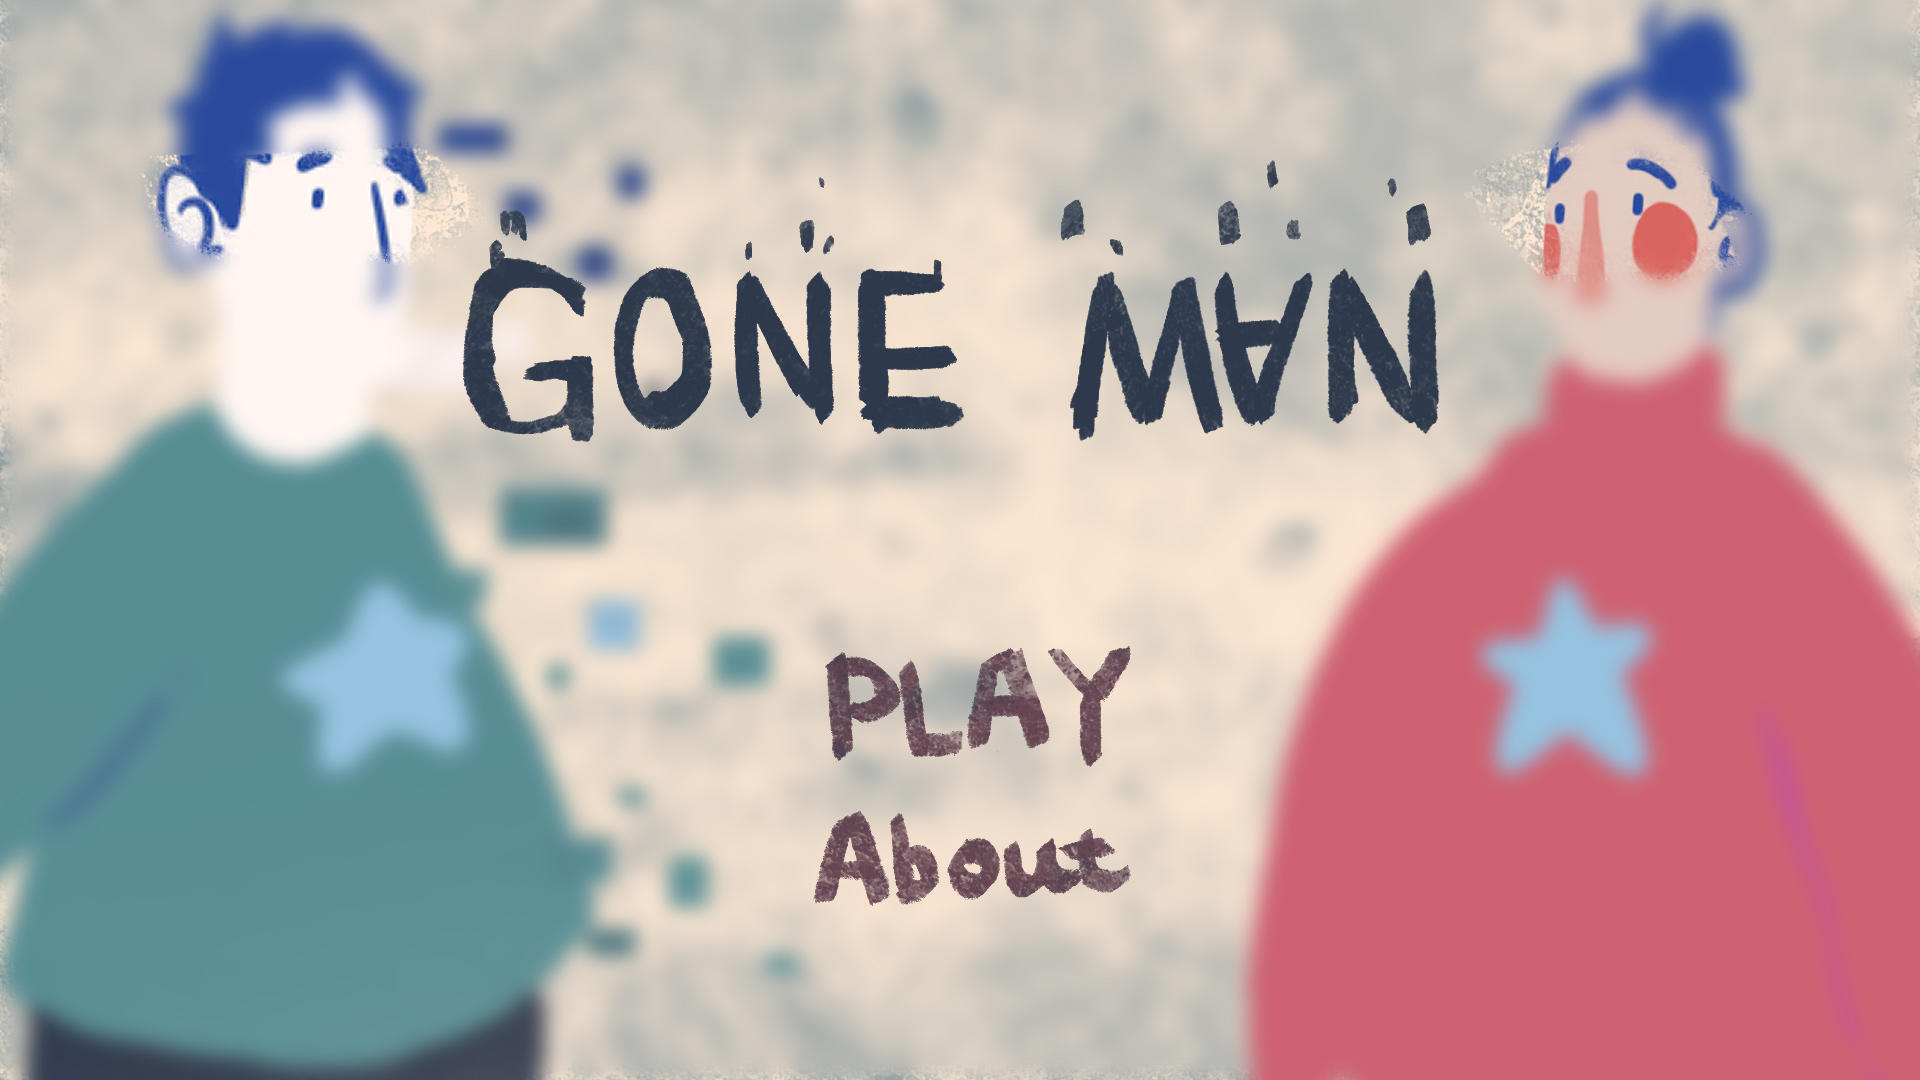 Banner of gone man 1.0